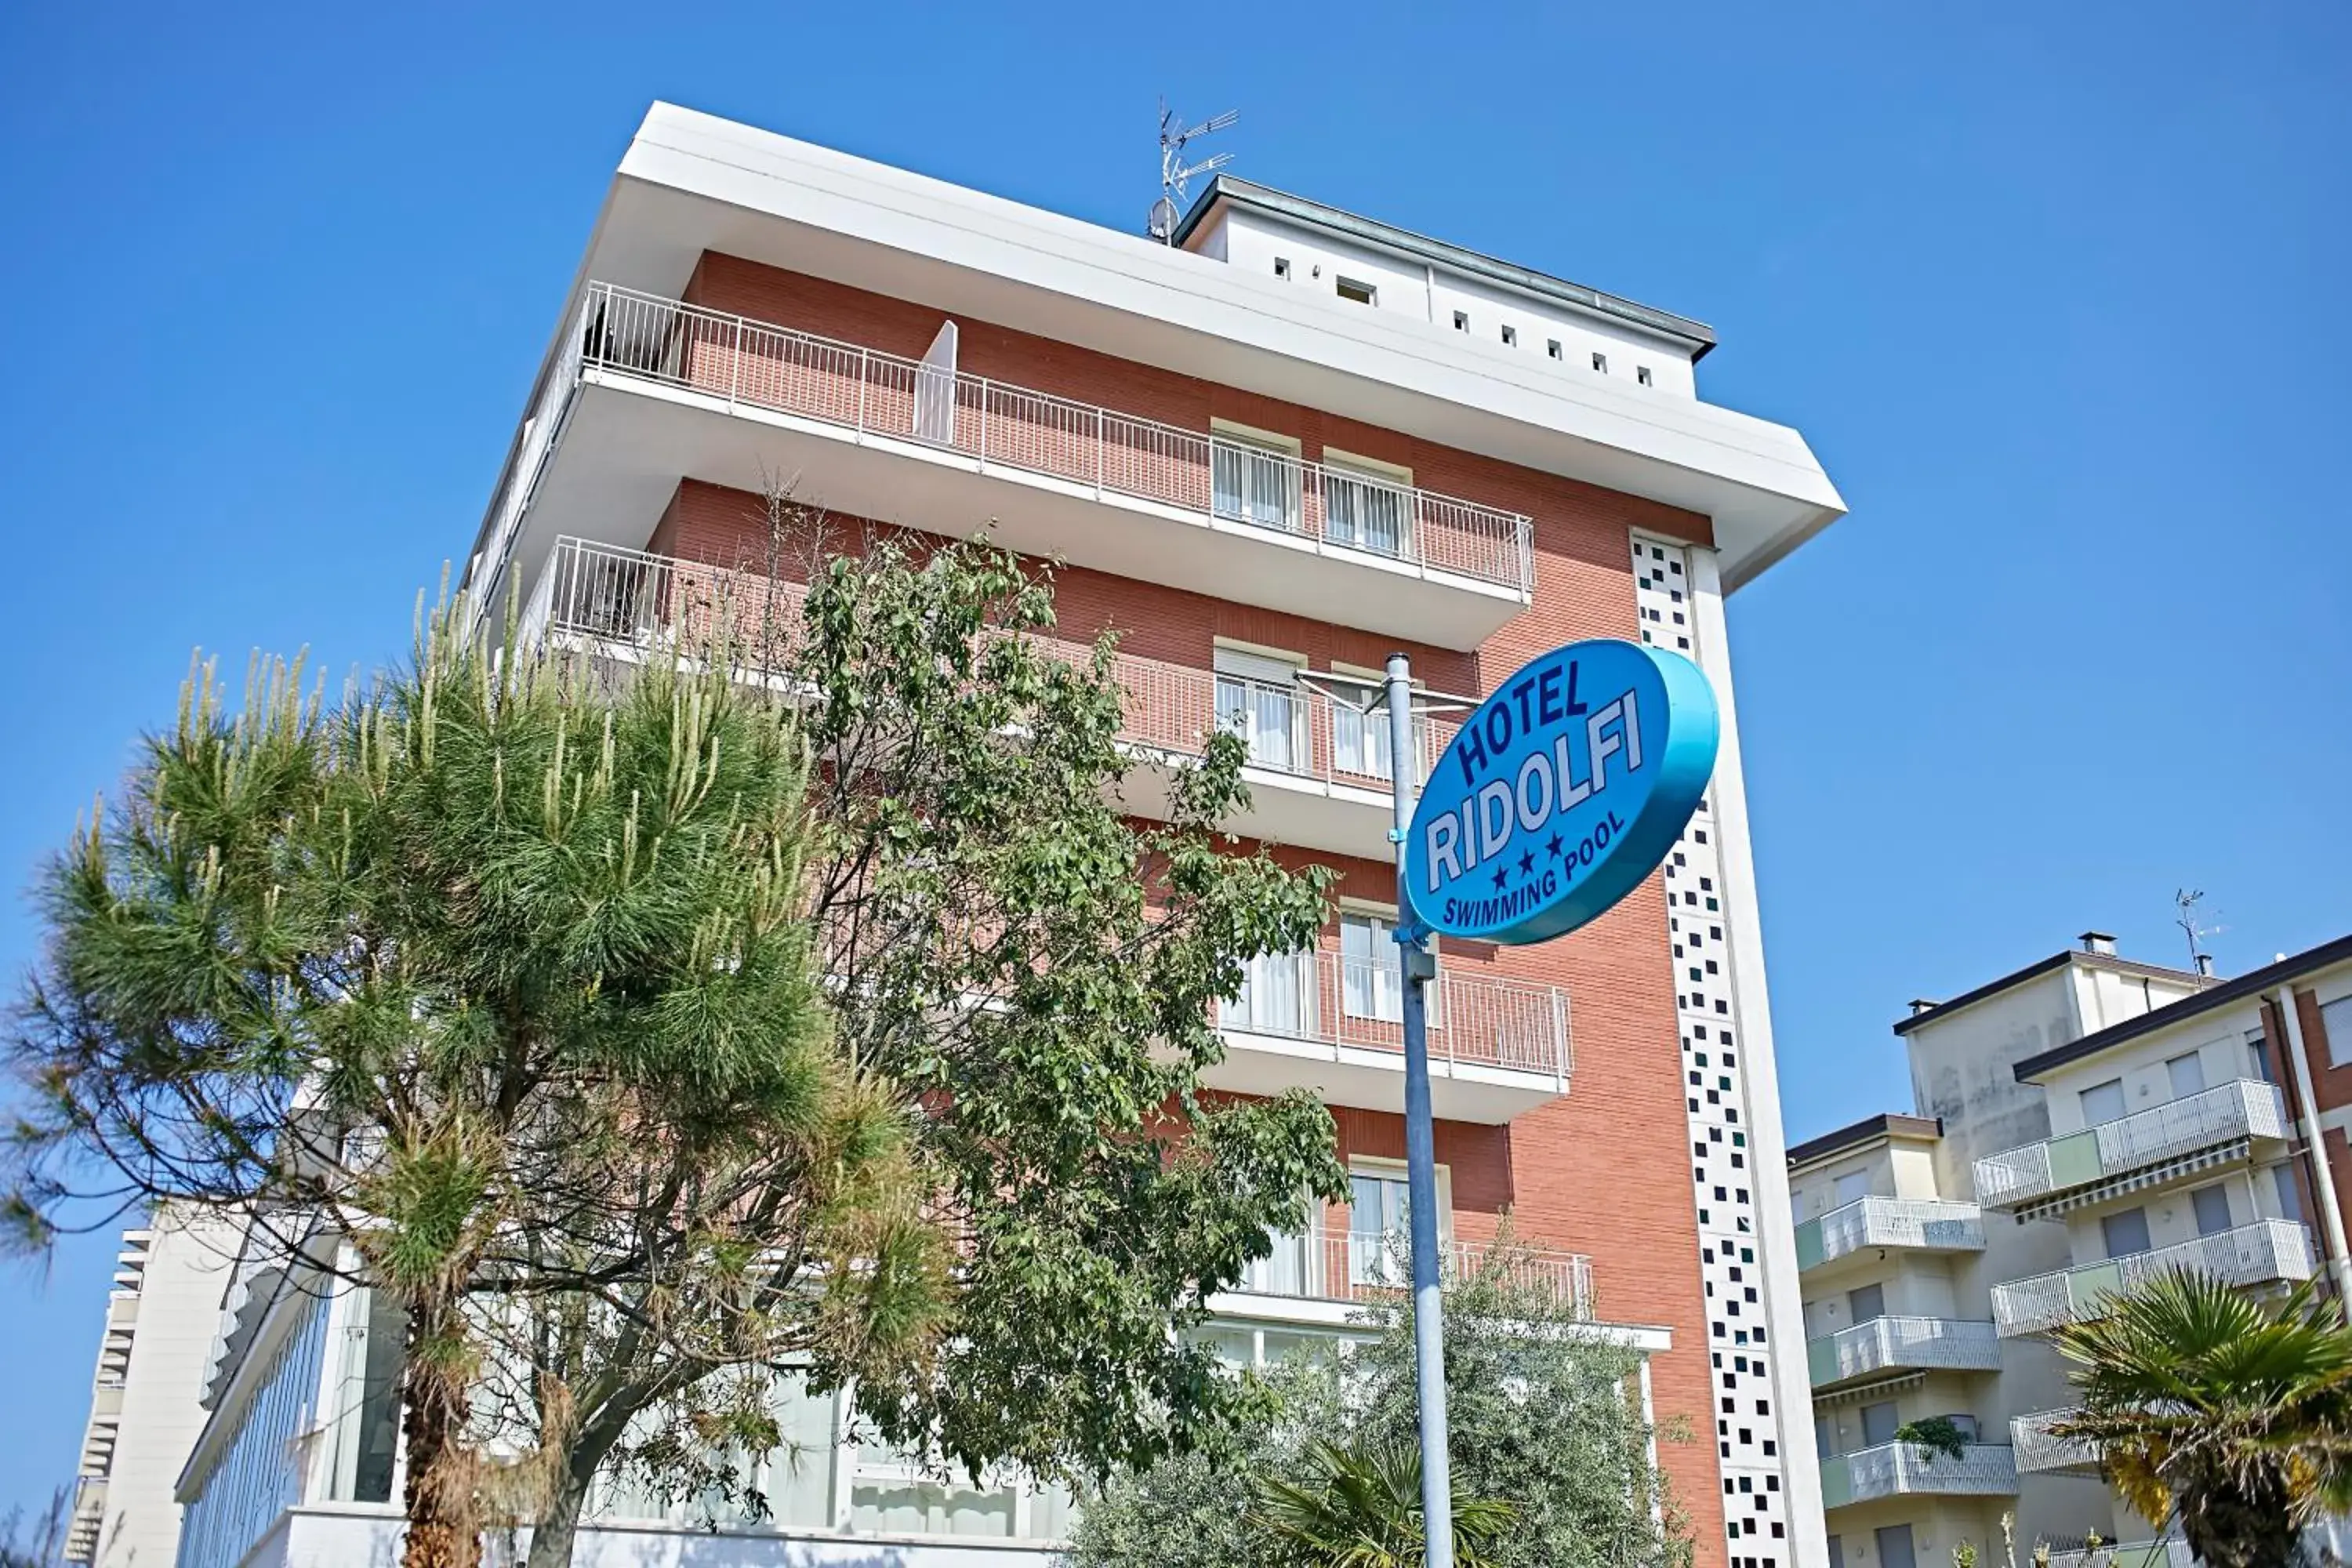 Property Building in Hotel Ridolfi